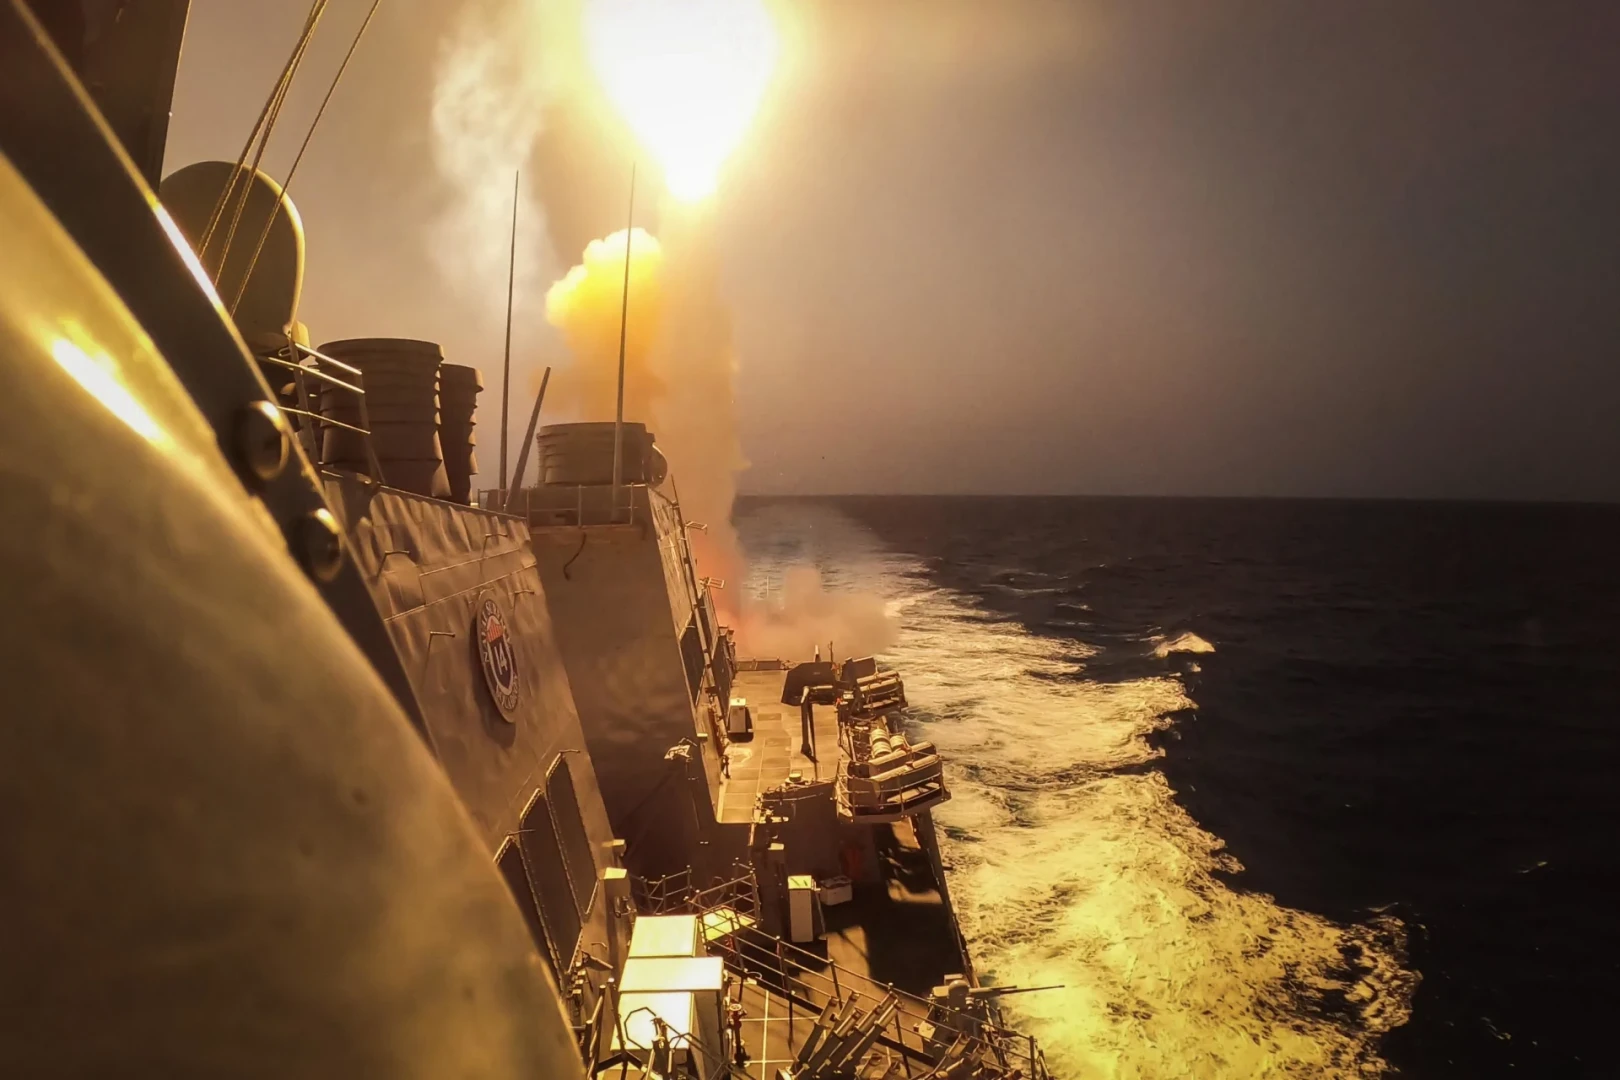 Alongside Washington, EU launches mission to protect Red Sea shipping